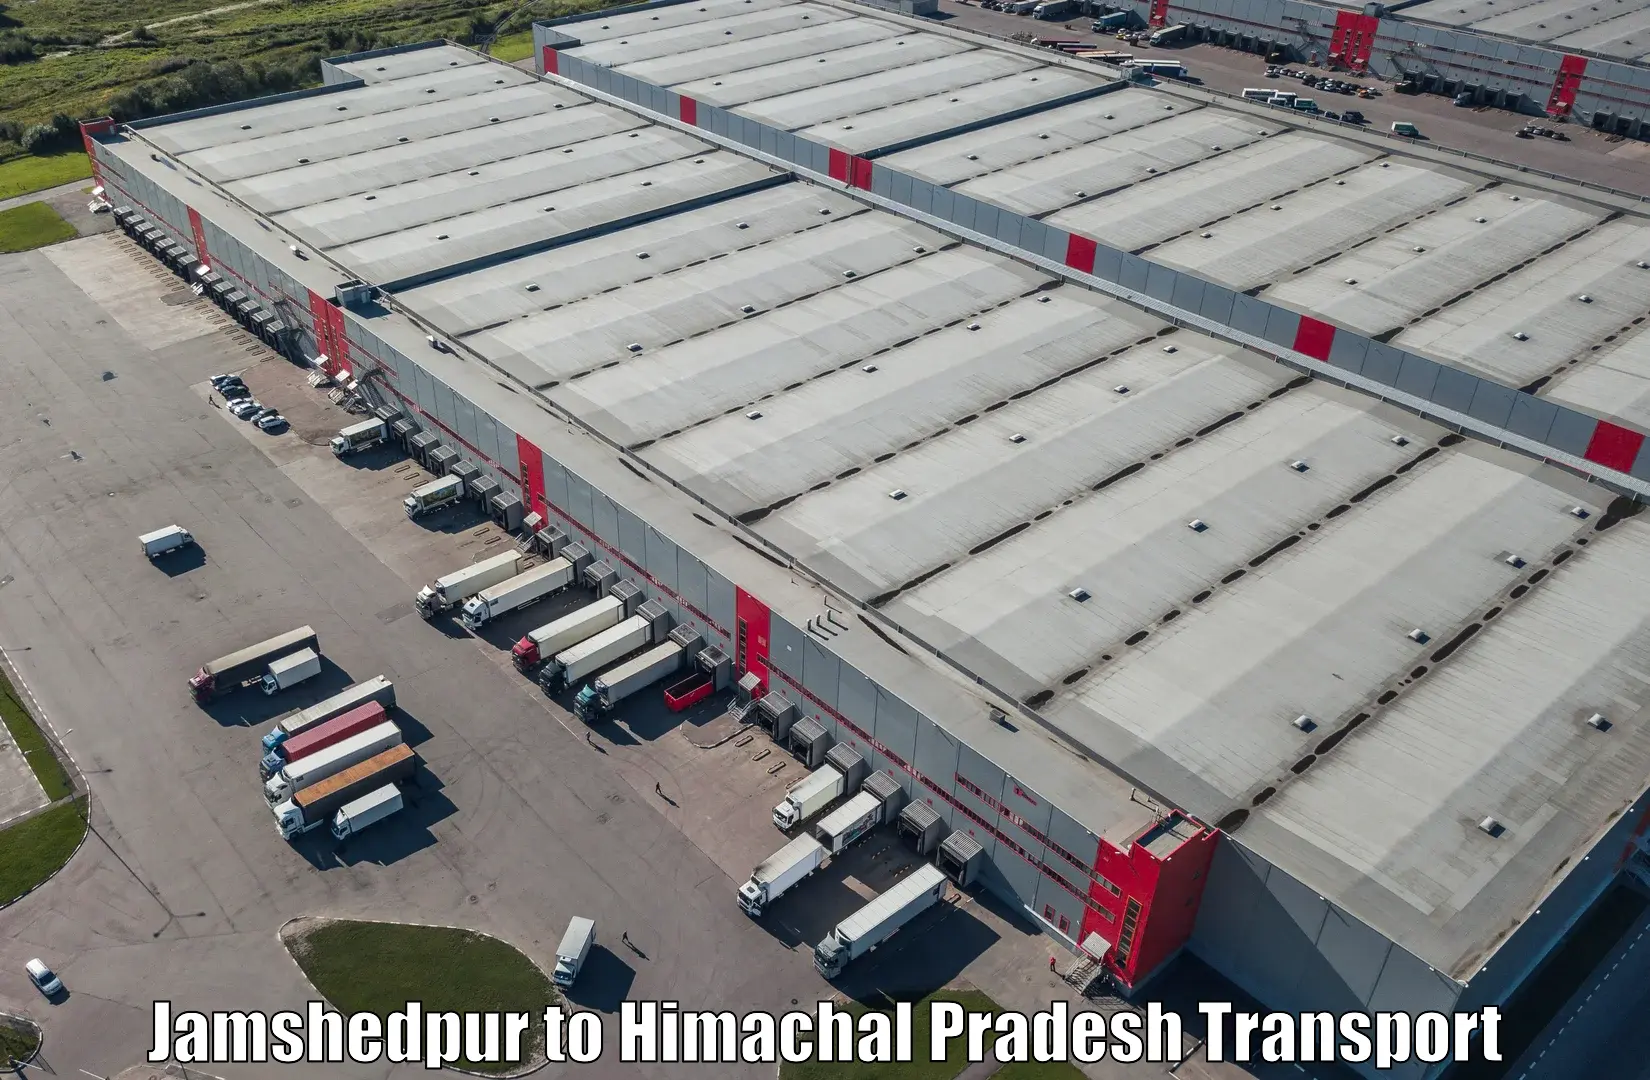 Truck transport companies in India Jamshedpur to Himachal Pradesh